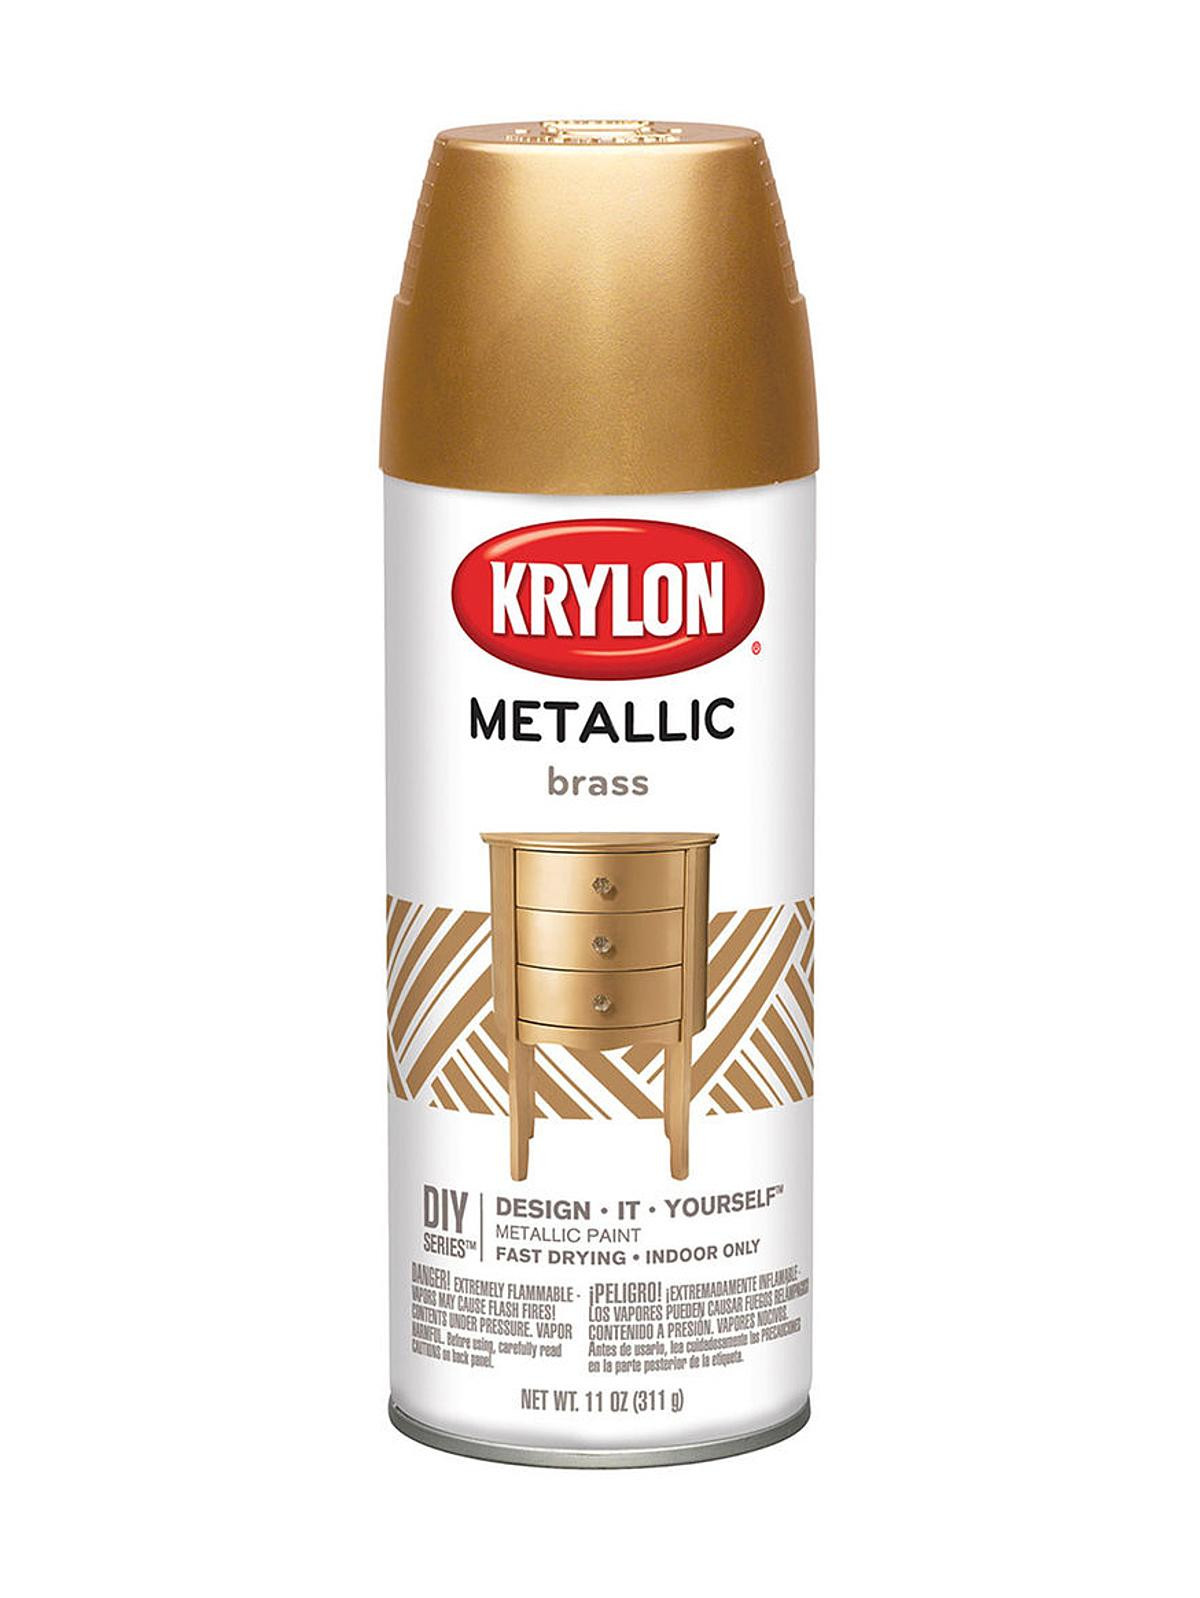 Best ideas about Krylon Spray Paint Colors
. Save or Pin Krylon Metallic Spray Paint Now.